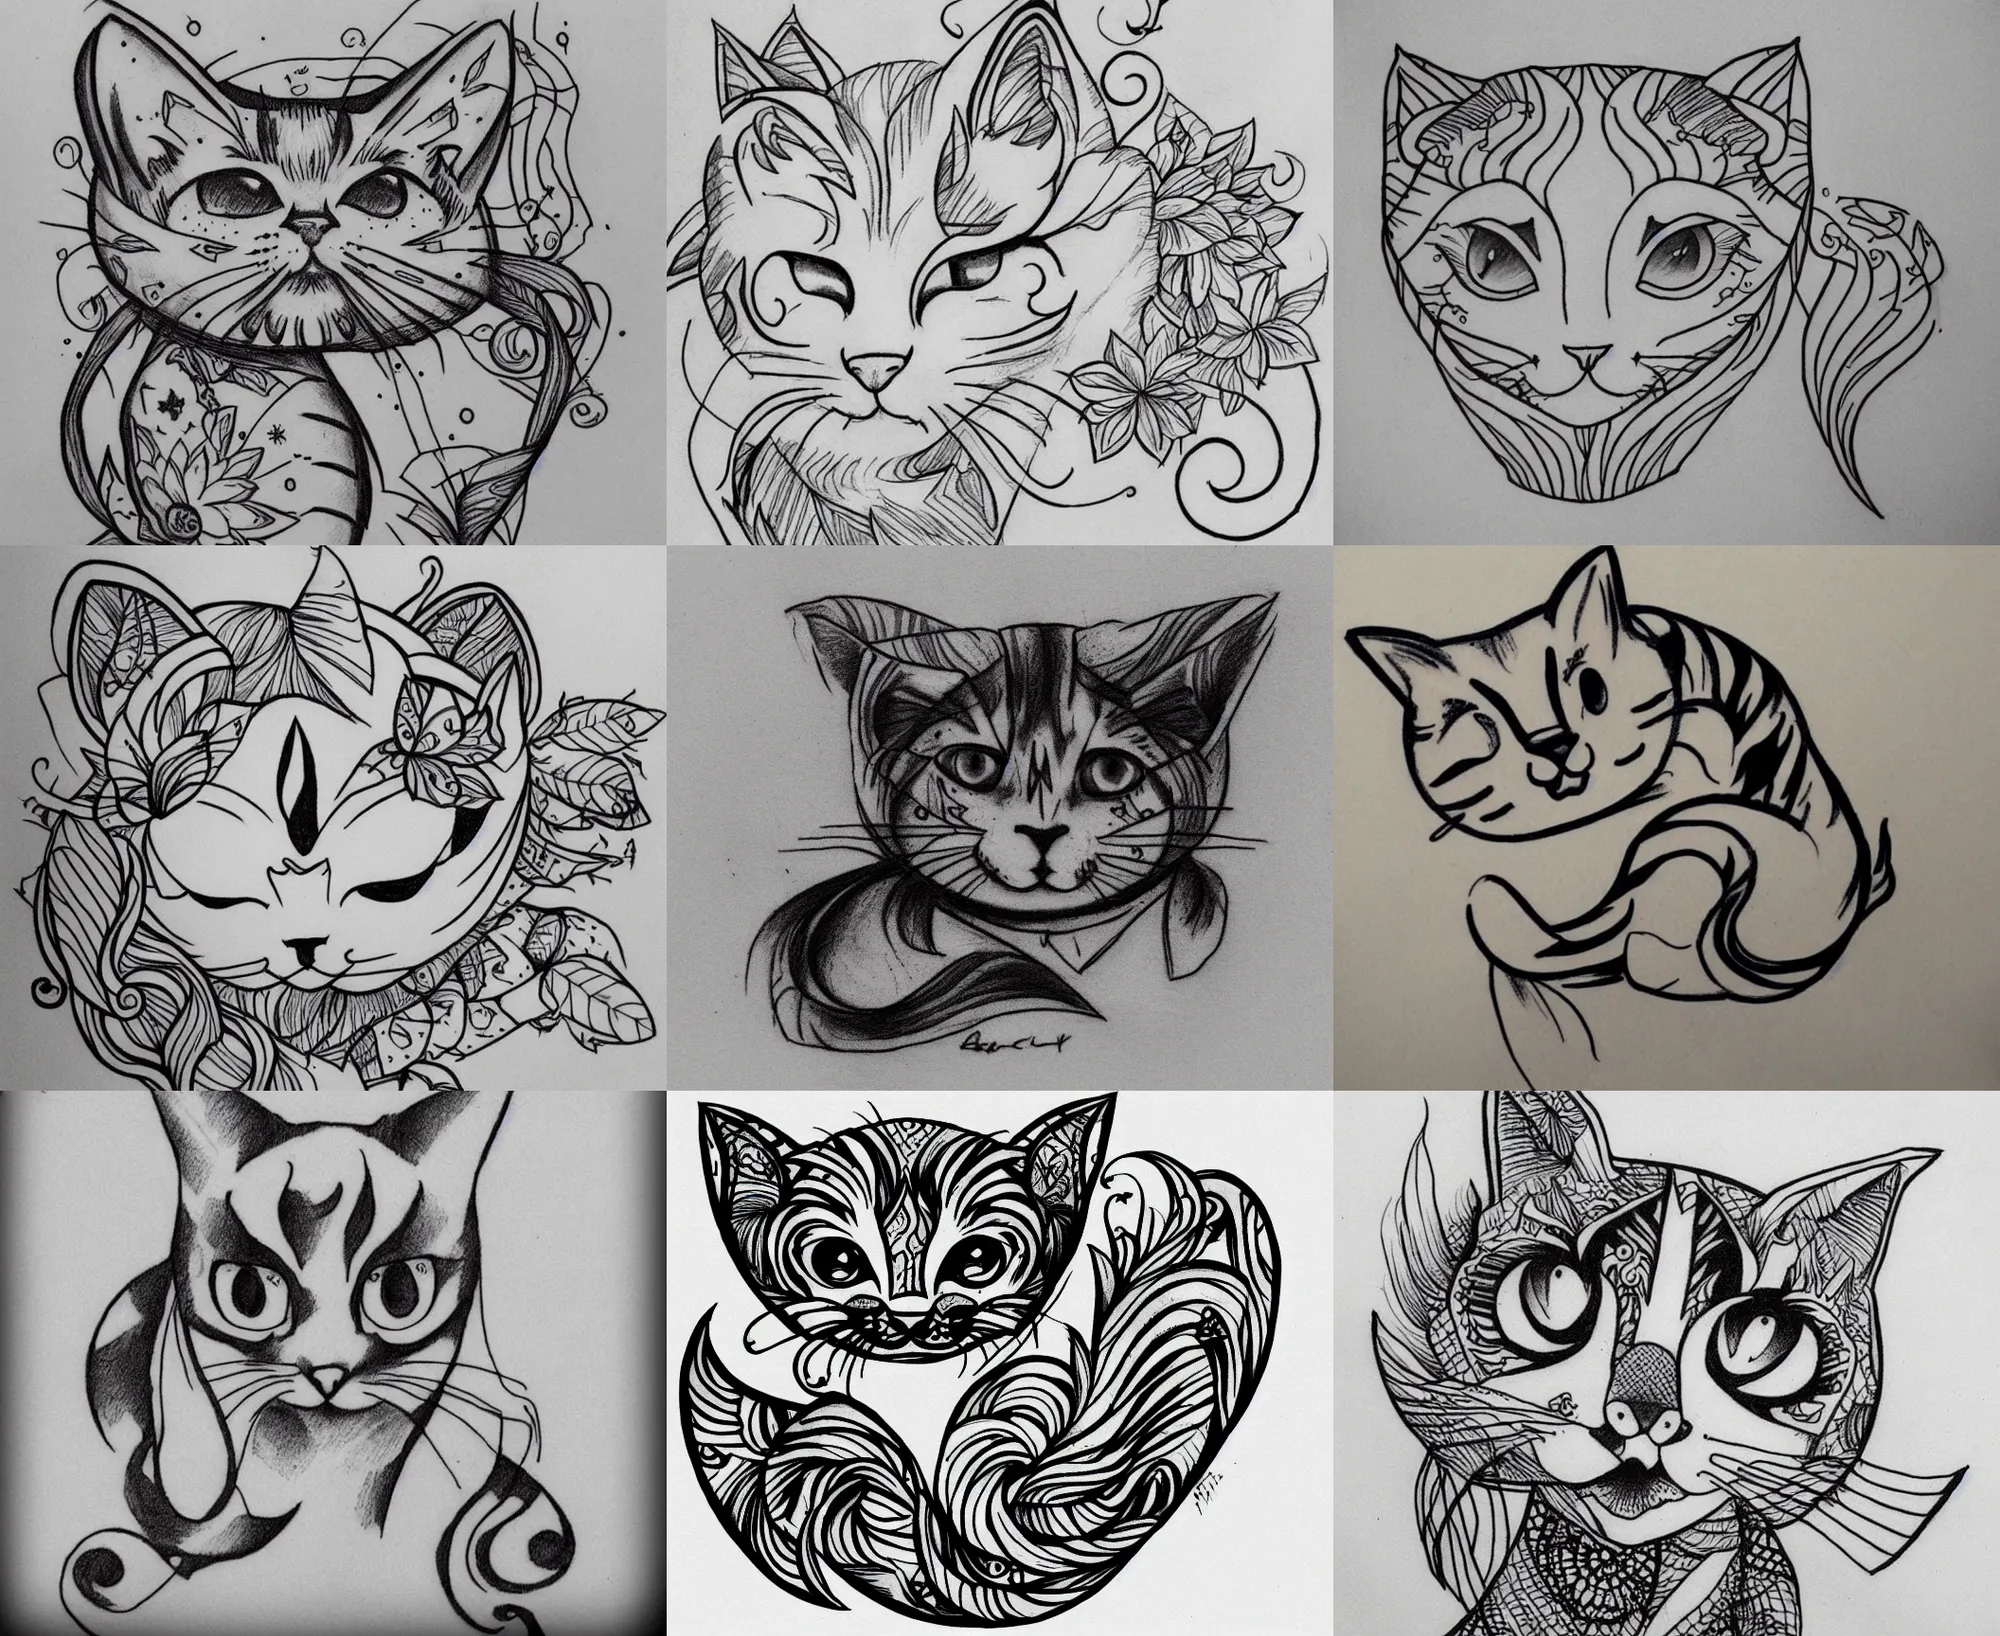 Space cat tattoo design (traditional) by Infernal-Feline on DeviantArt